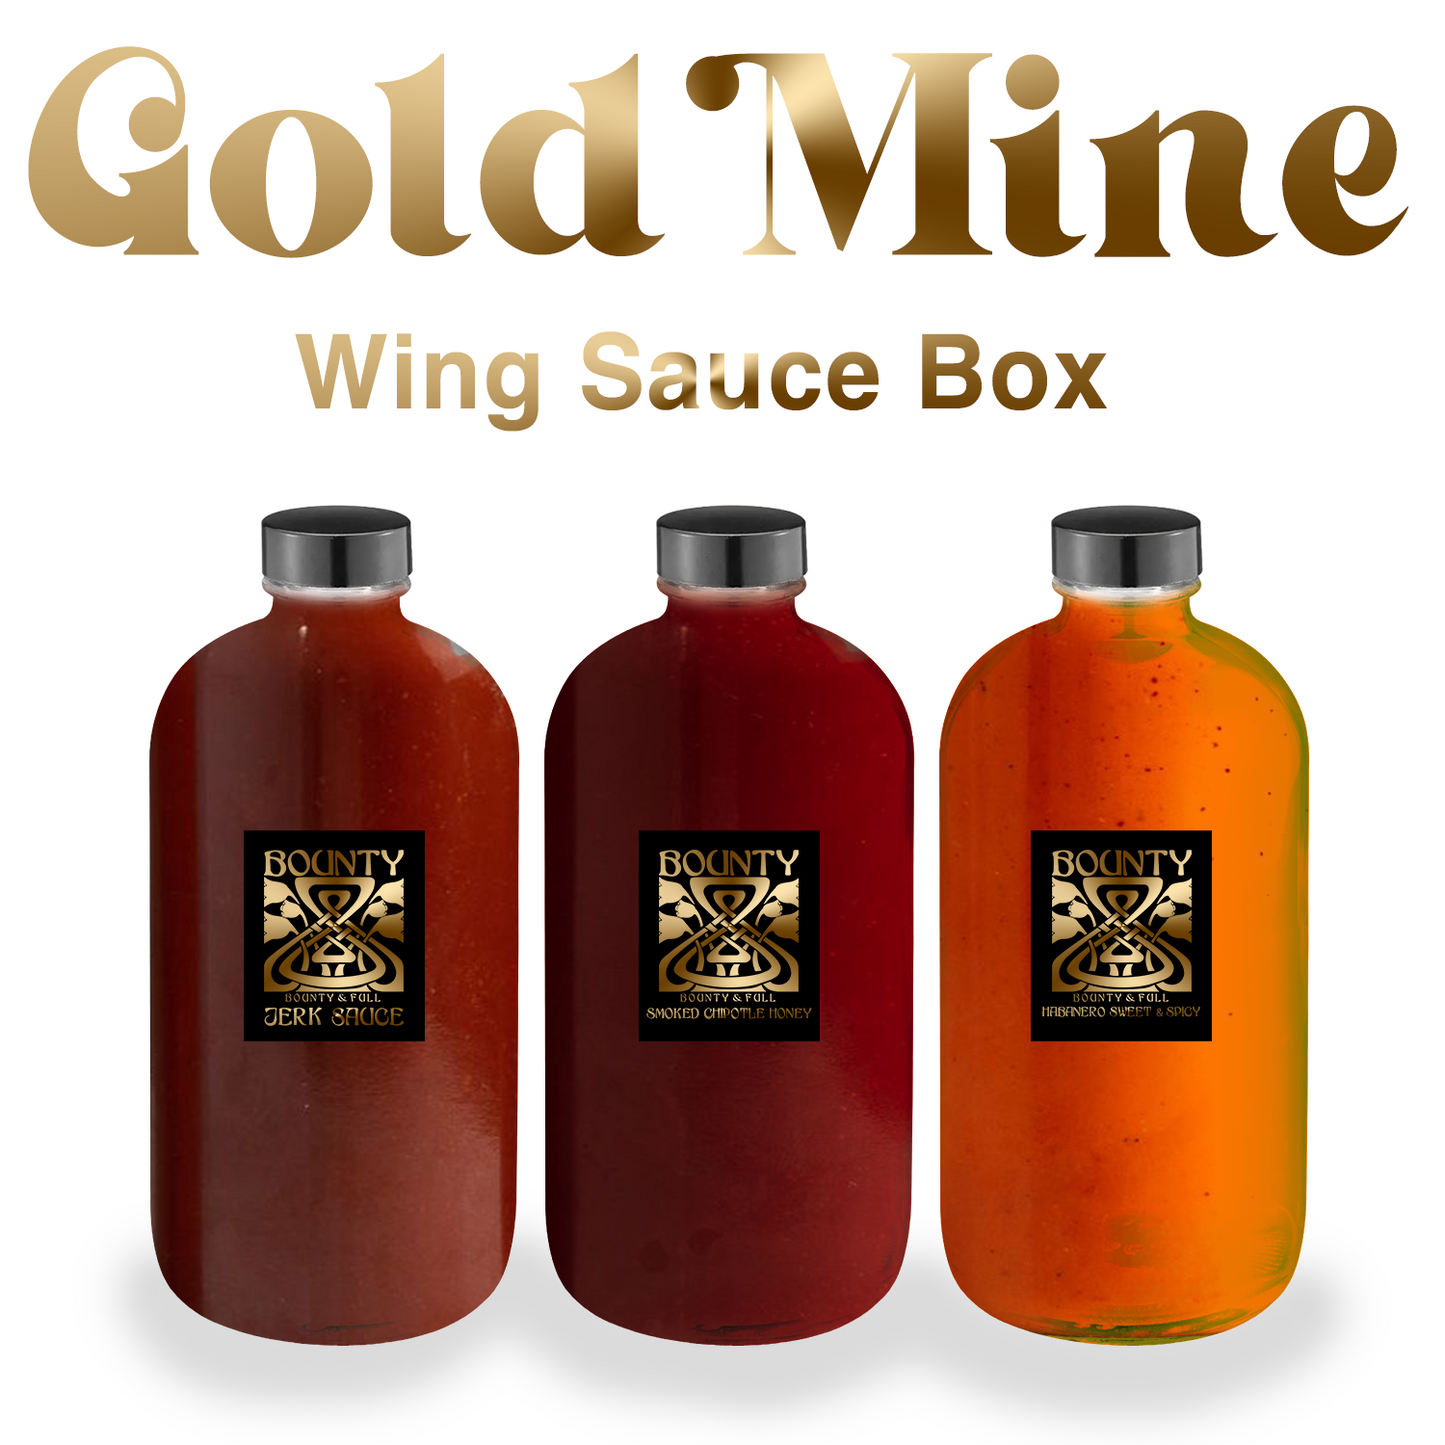 GOLD MINE Wing Sauce Box